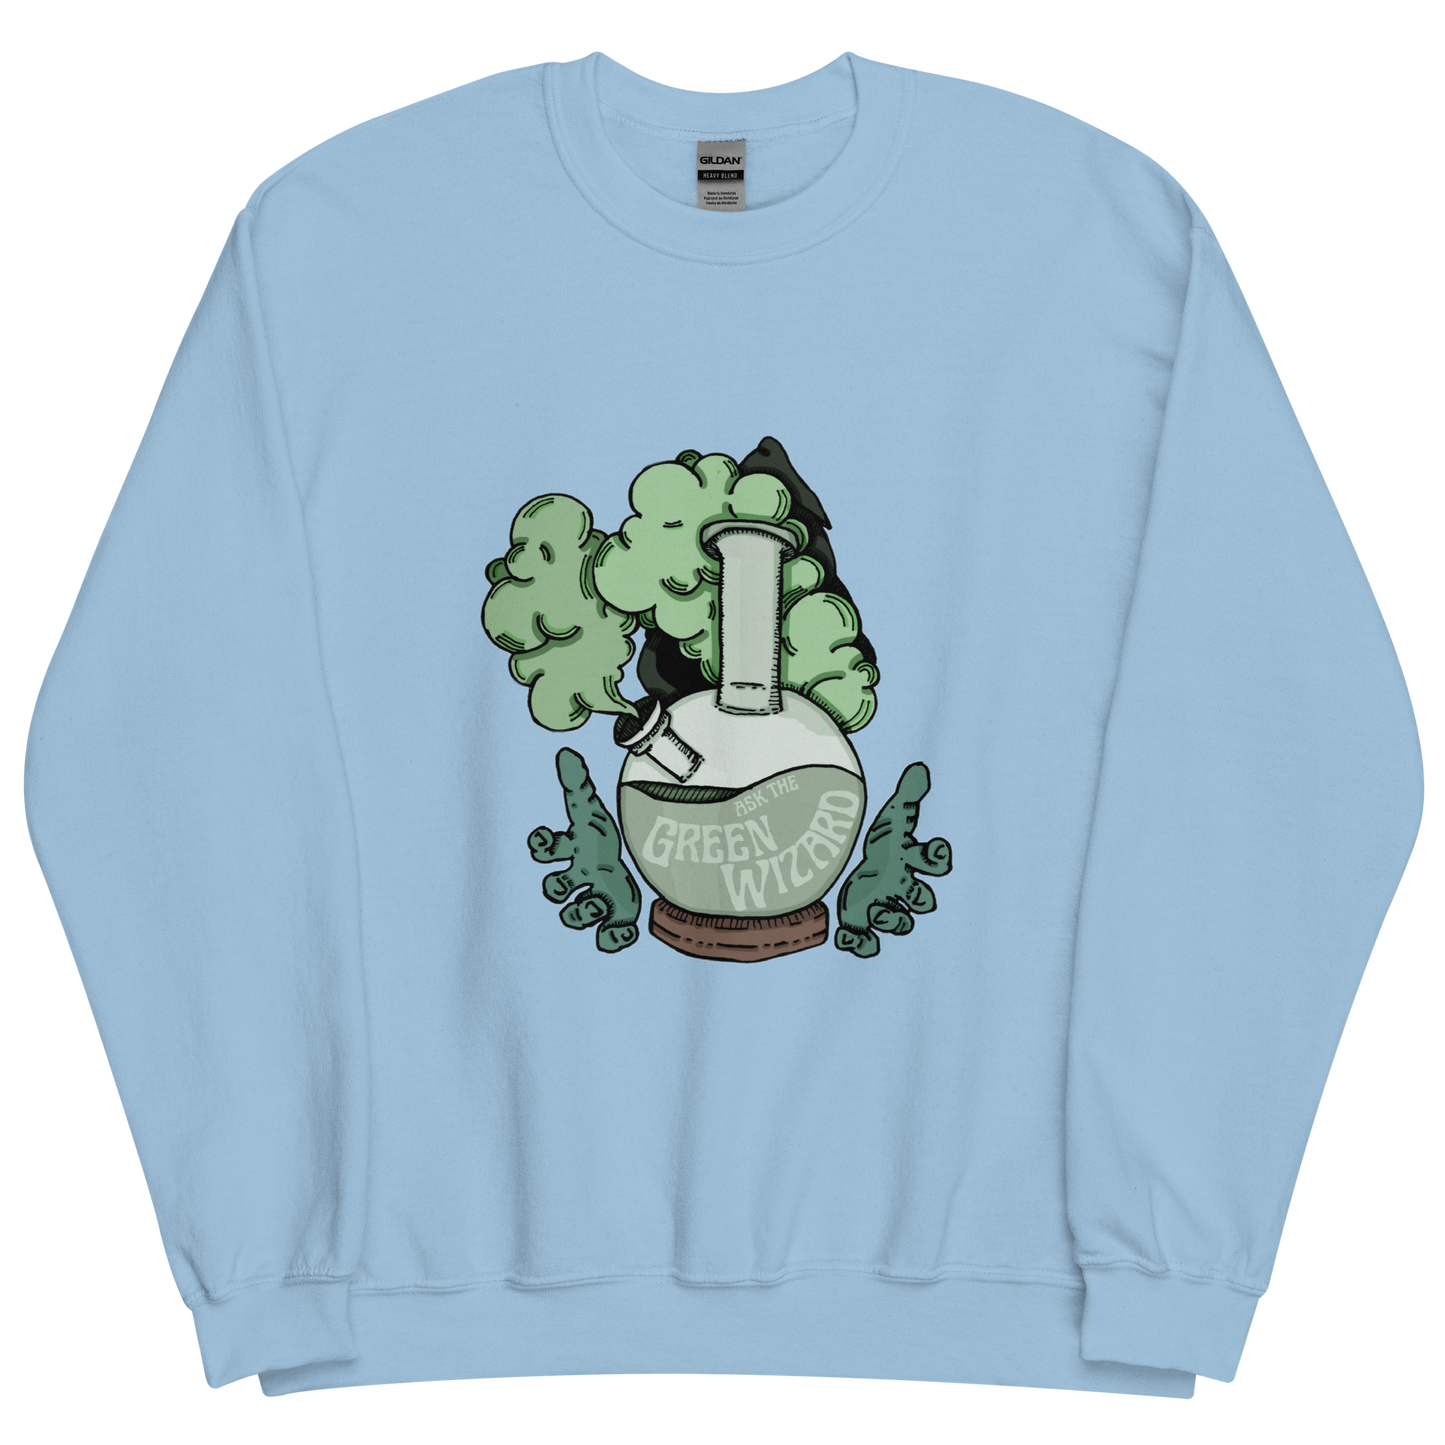 ask the green wizard sweatshirt in light blue - gaslit apparel